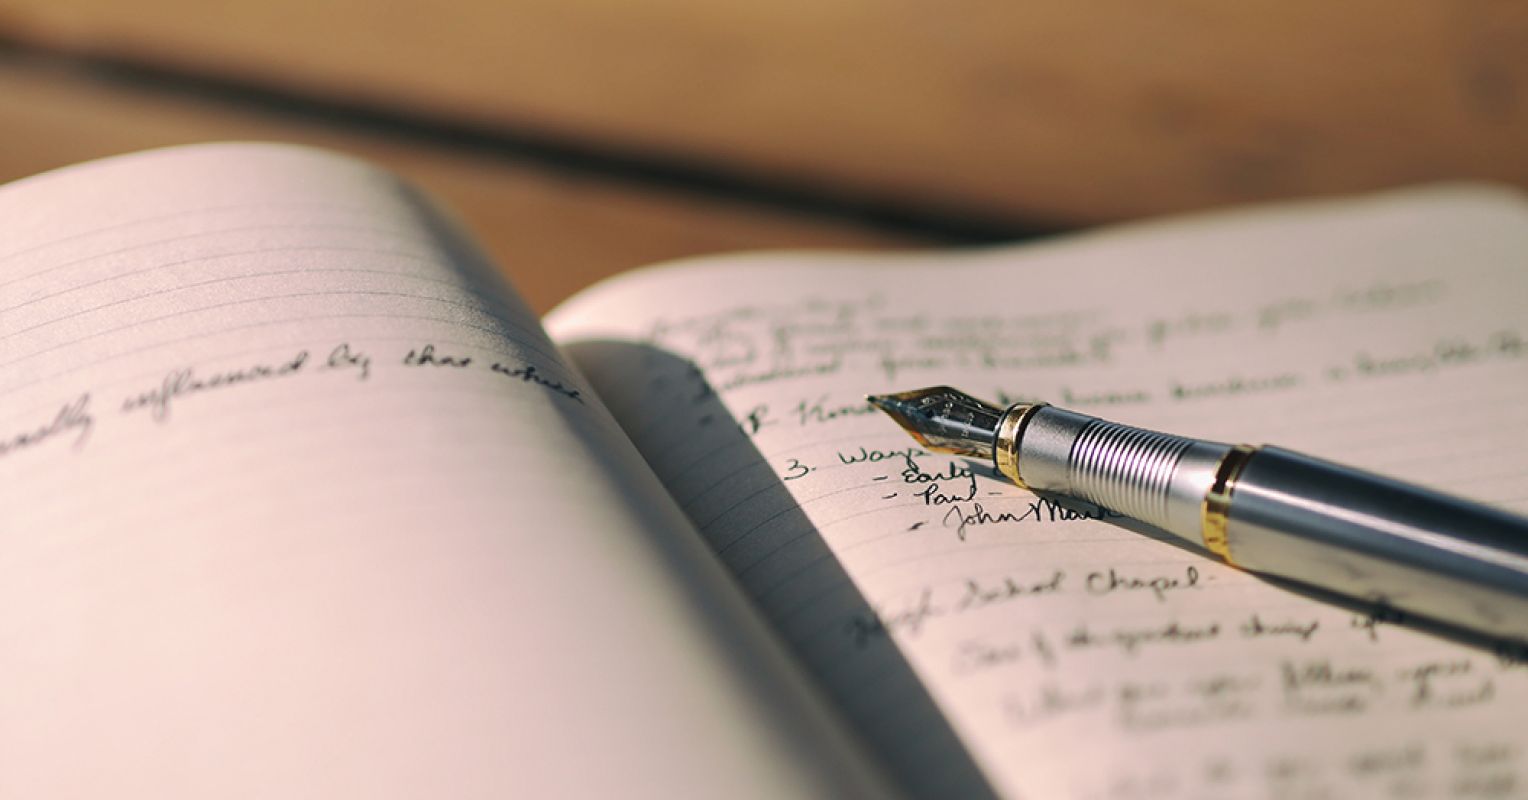 Journaling: The Healing Power Of The Pen